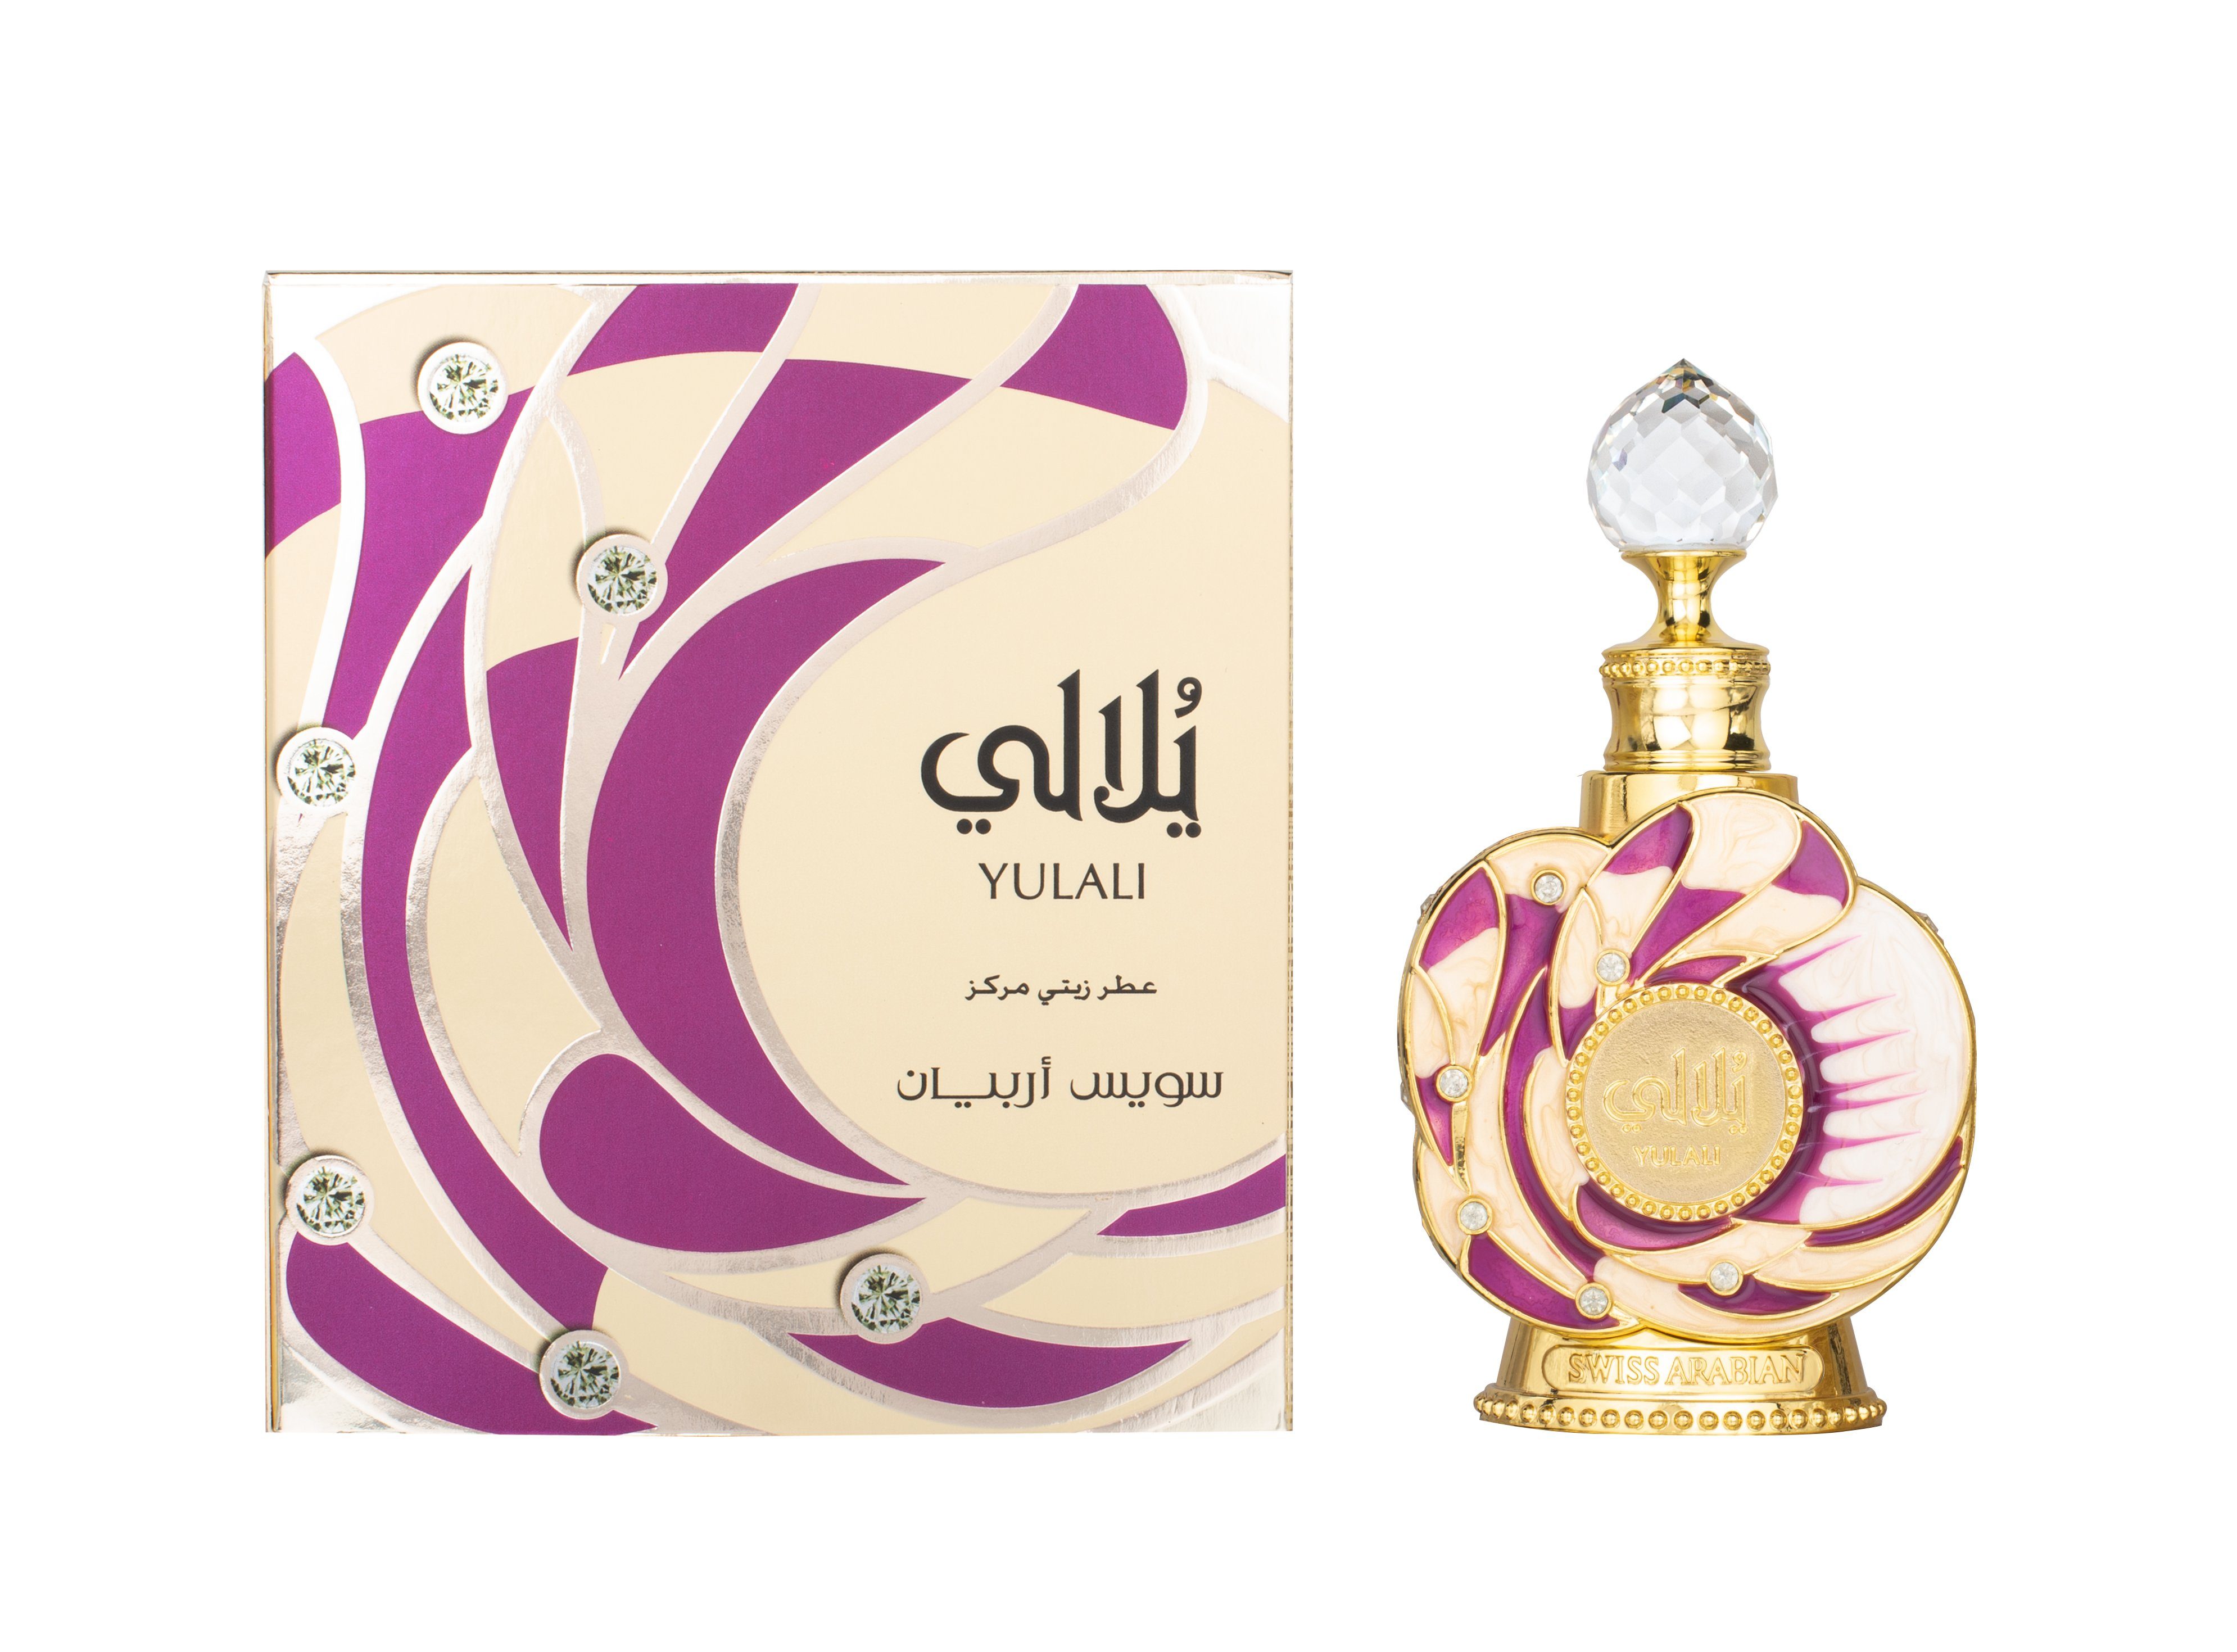 Swiss Arabian Öl-Parfüm Swiss Arabian Parfüm Öl Yulali Women